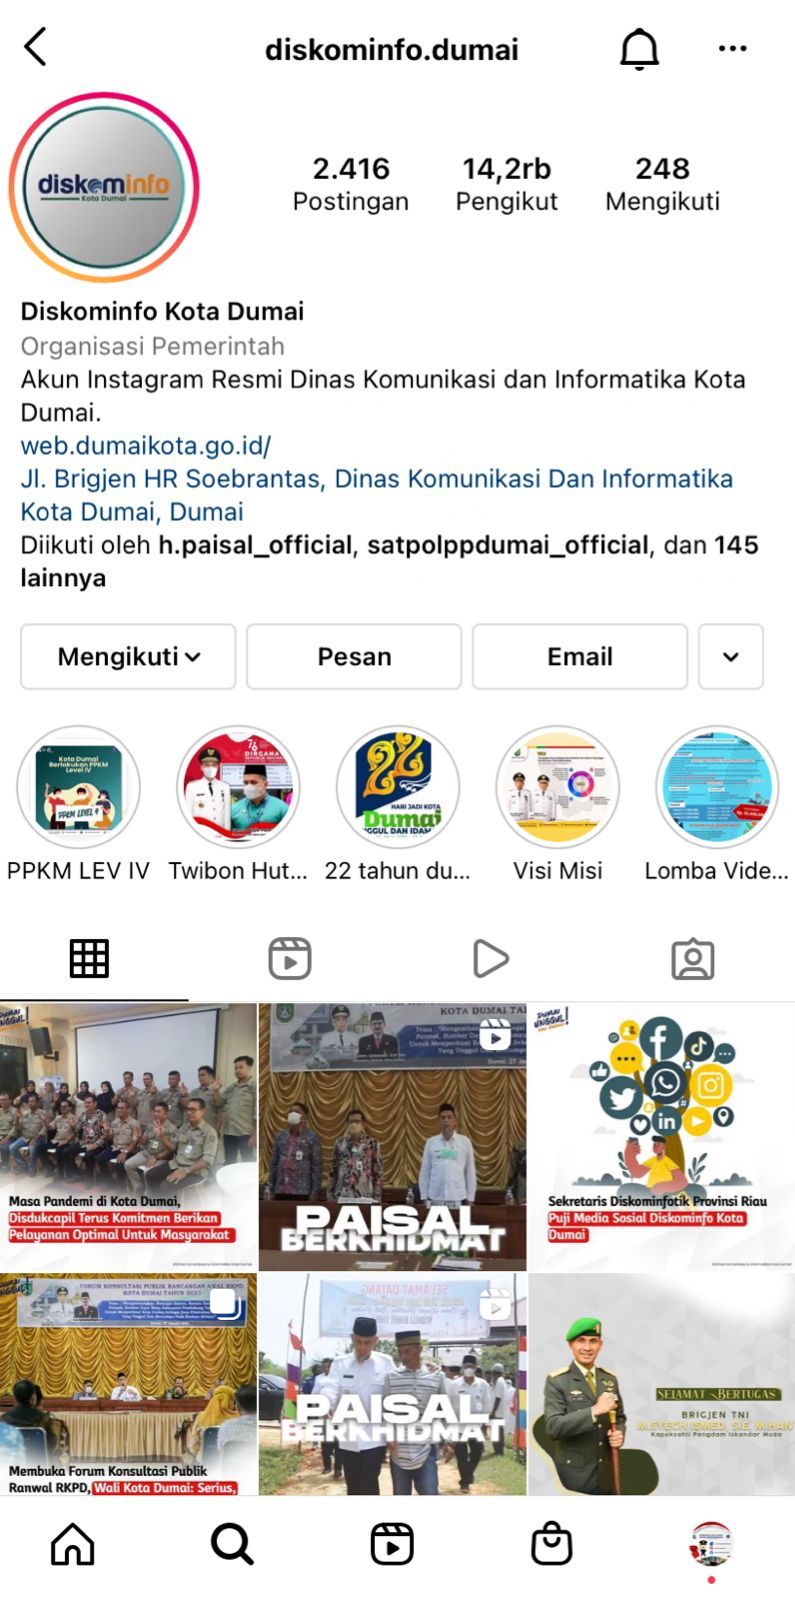 Sekretaris Diskominfotik Provinsi Riau Puji Medsos Diskominfo Kota Dumai